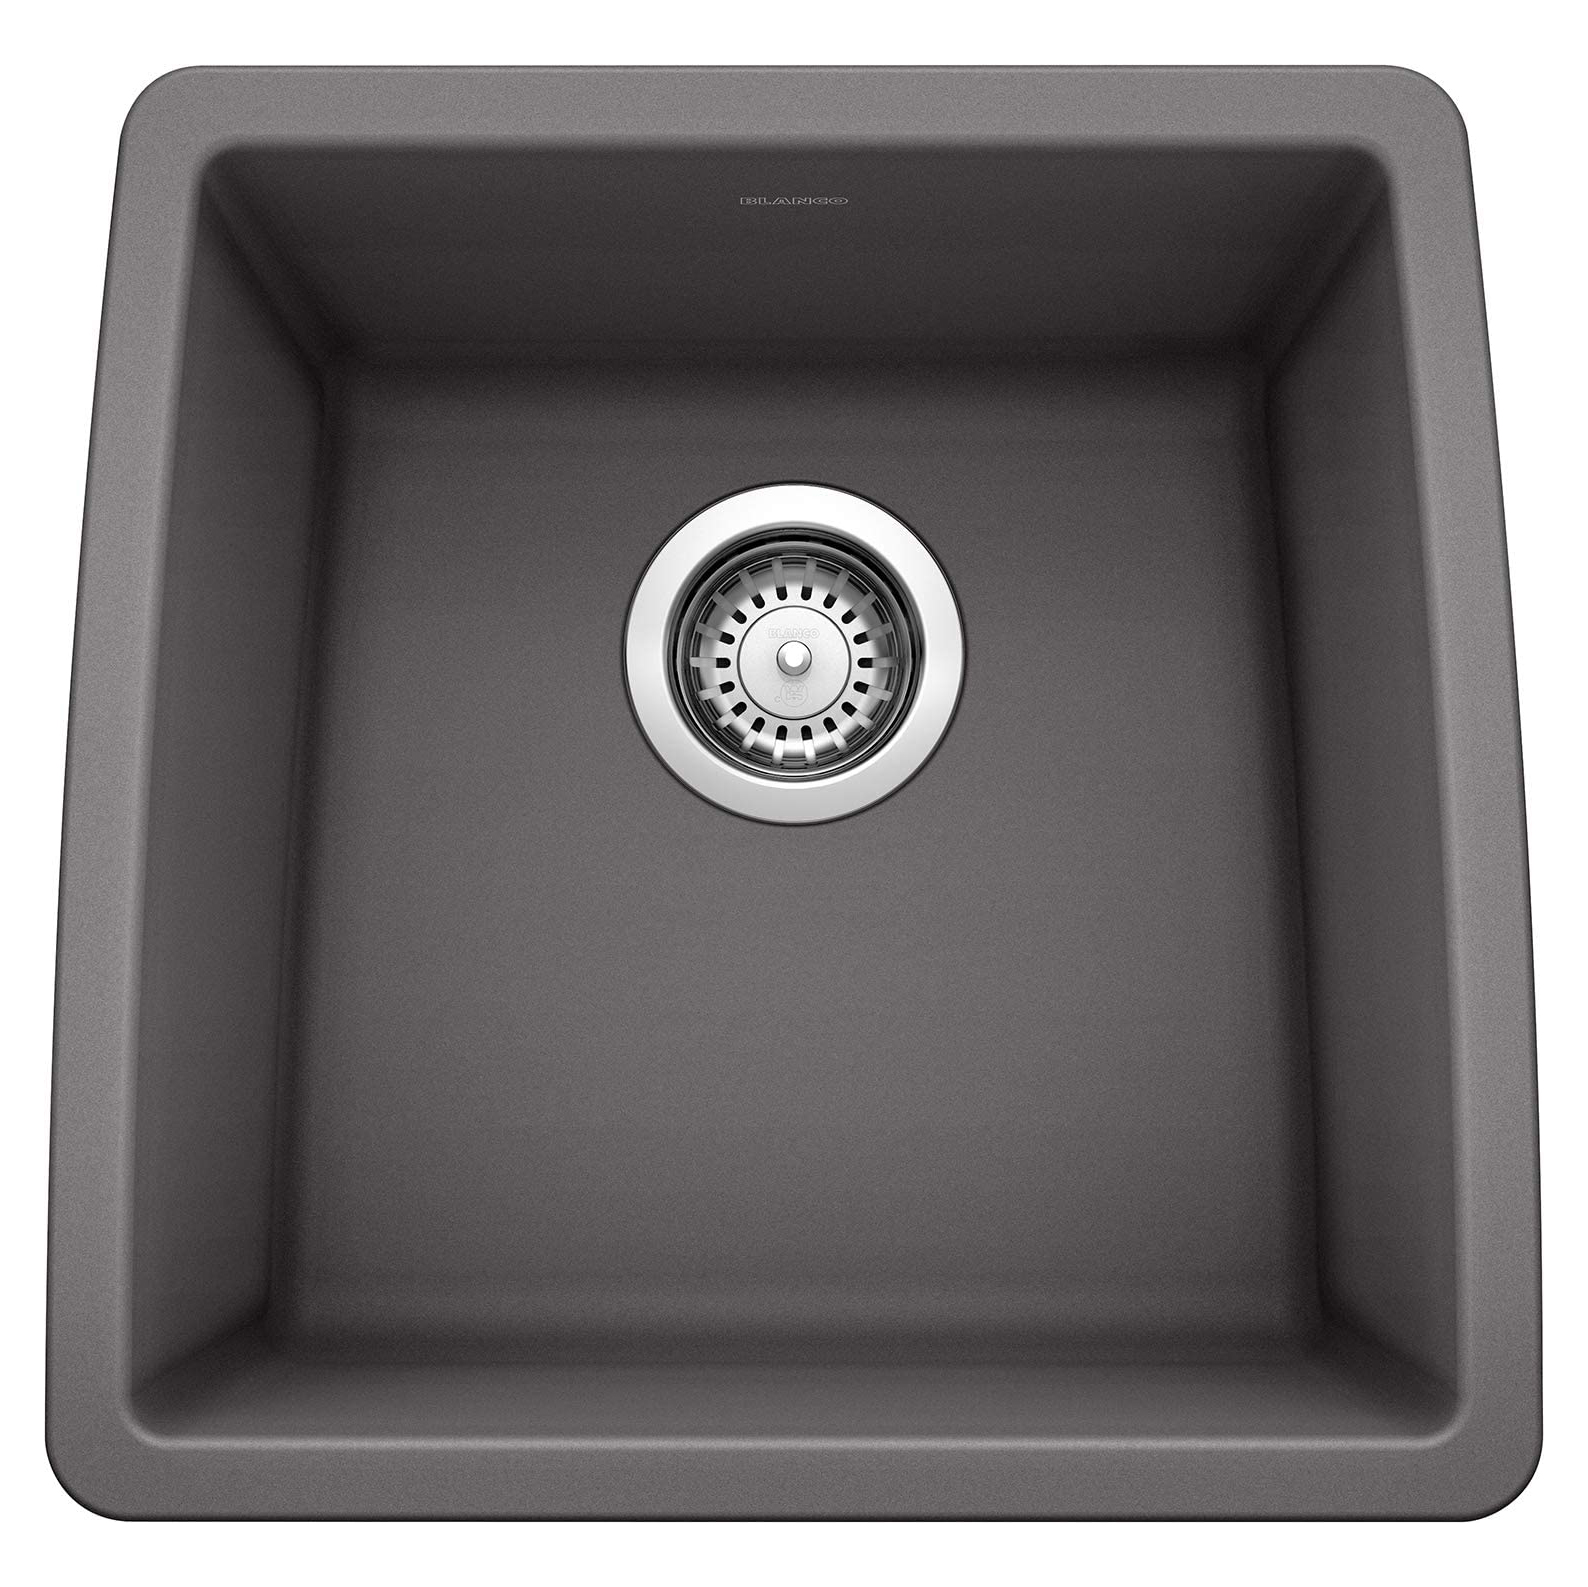 Performa 17-1/2x17x9" Single Bowl Bar Sink in Cinder